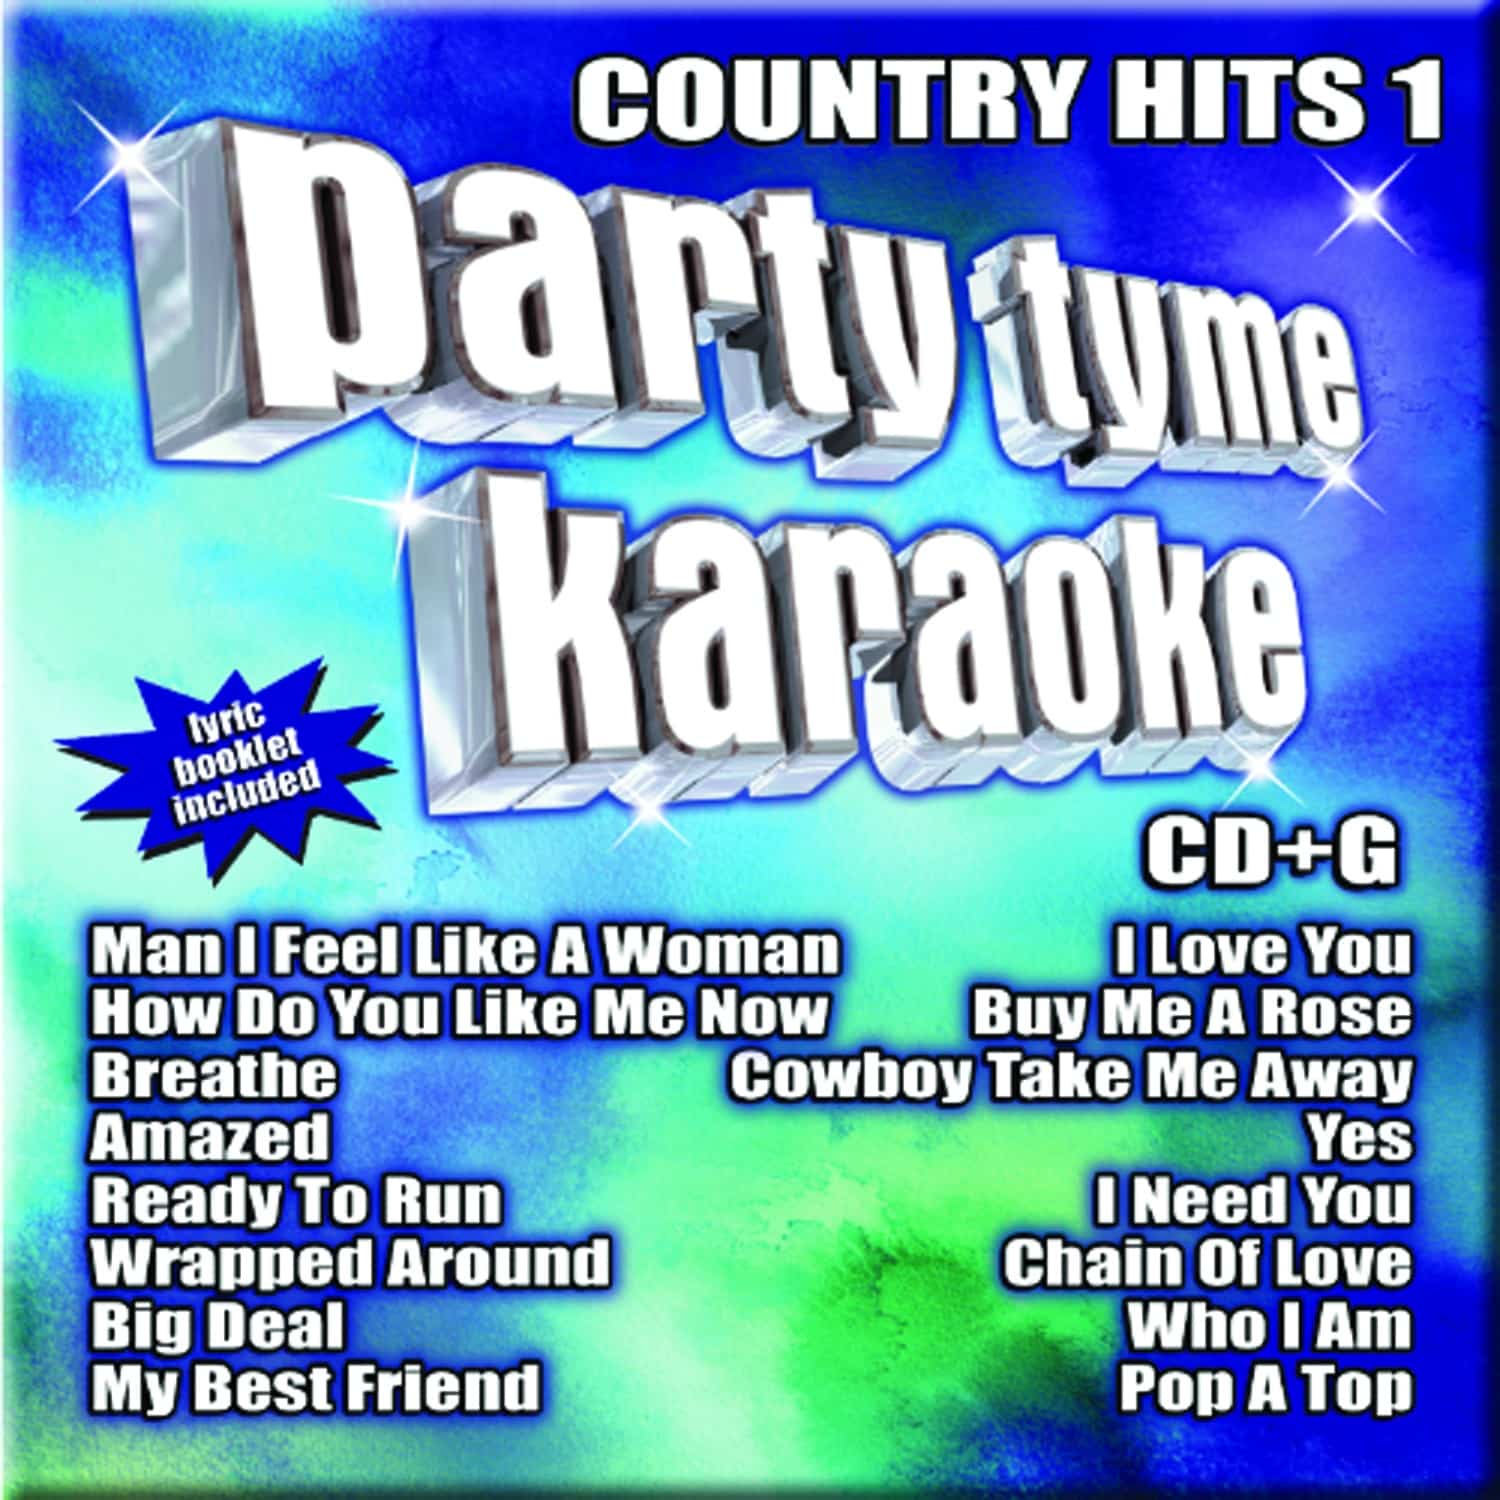 Party tyme karaoke country hits 11